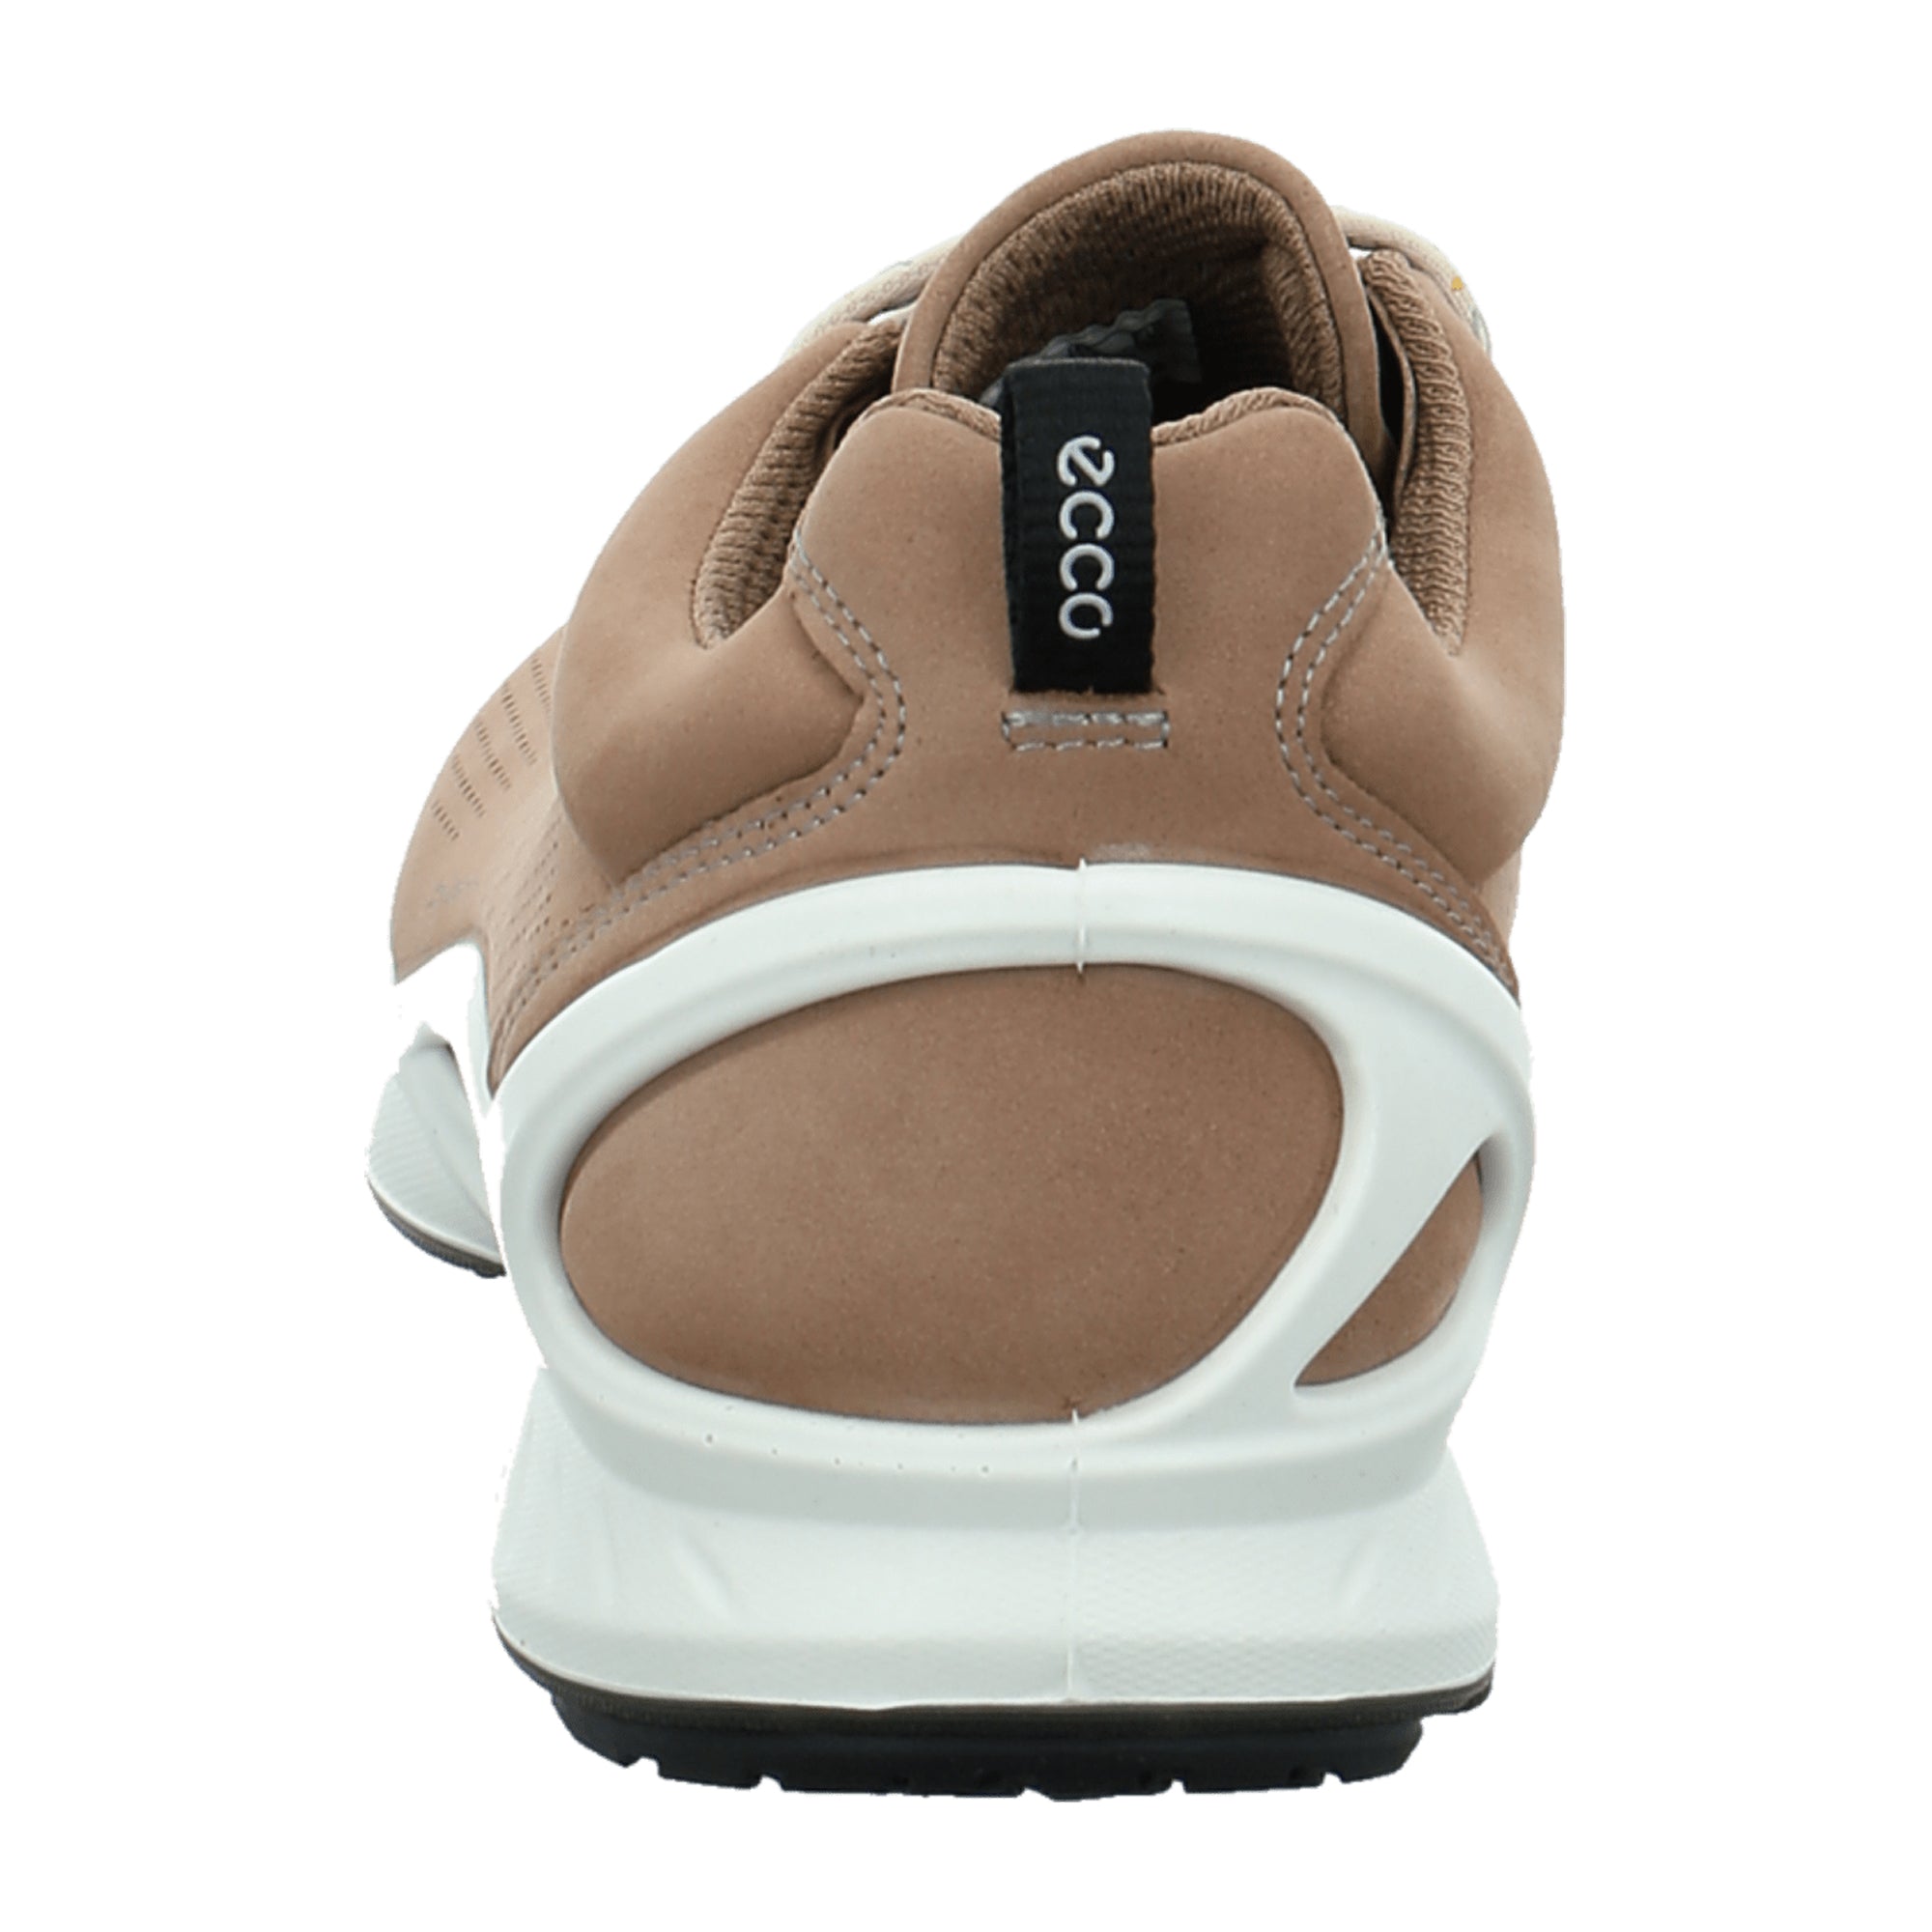 Ecco Men's Beige Outdoor Shoes - Durable & Stylish